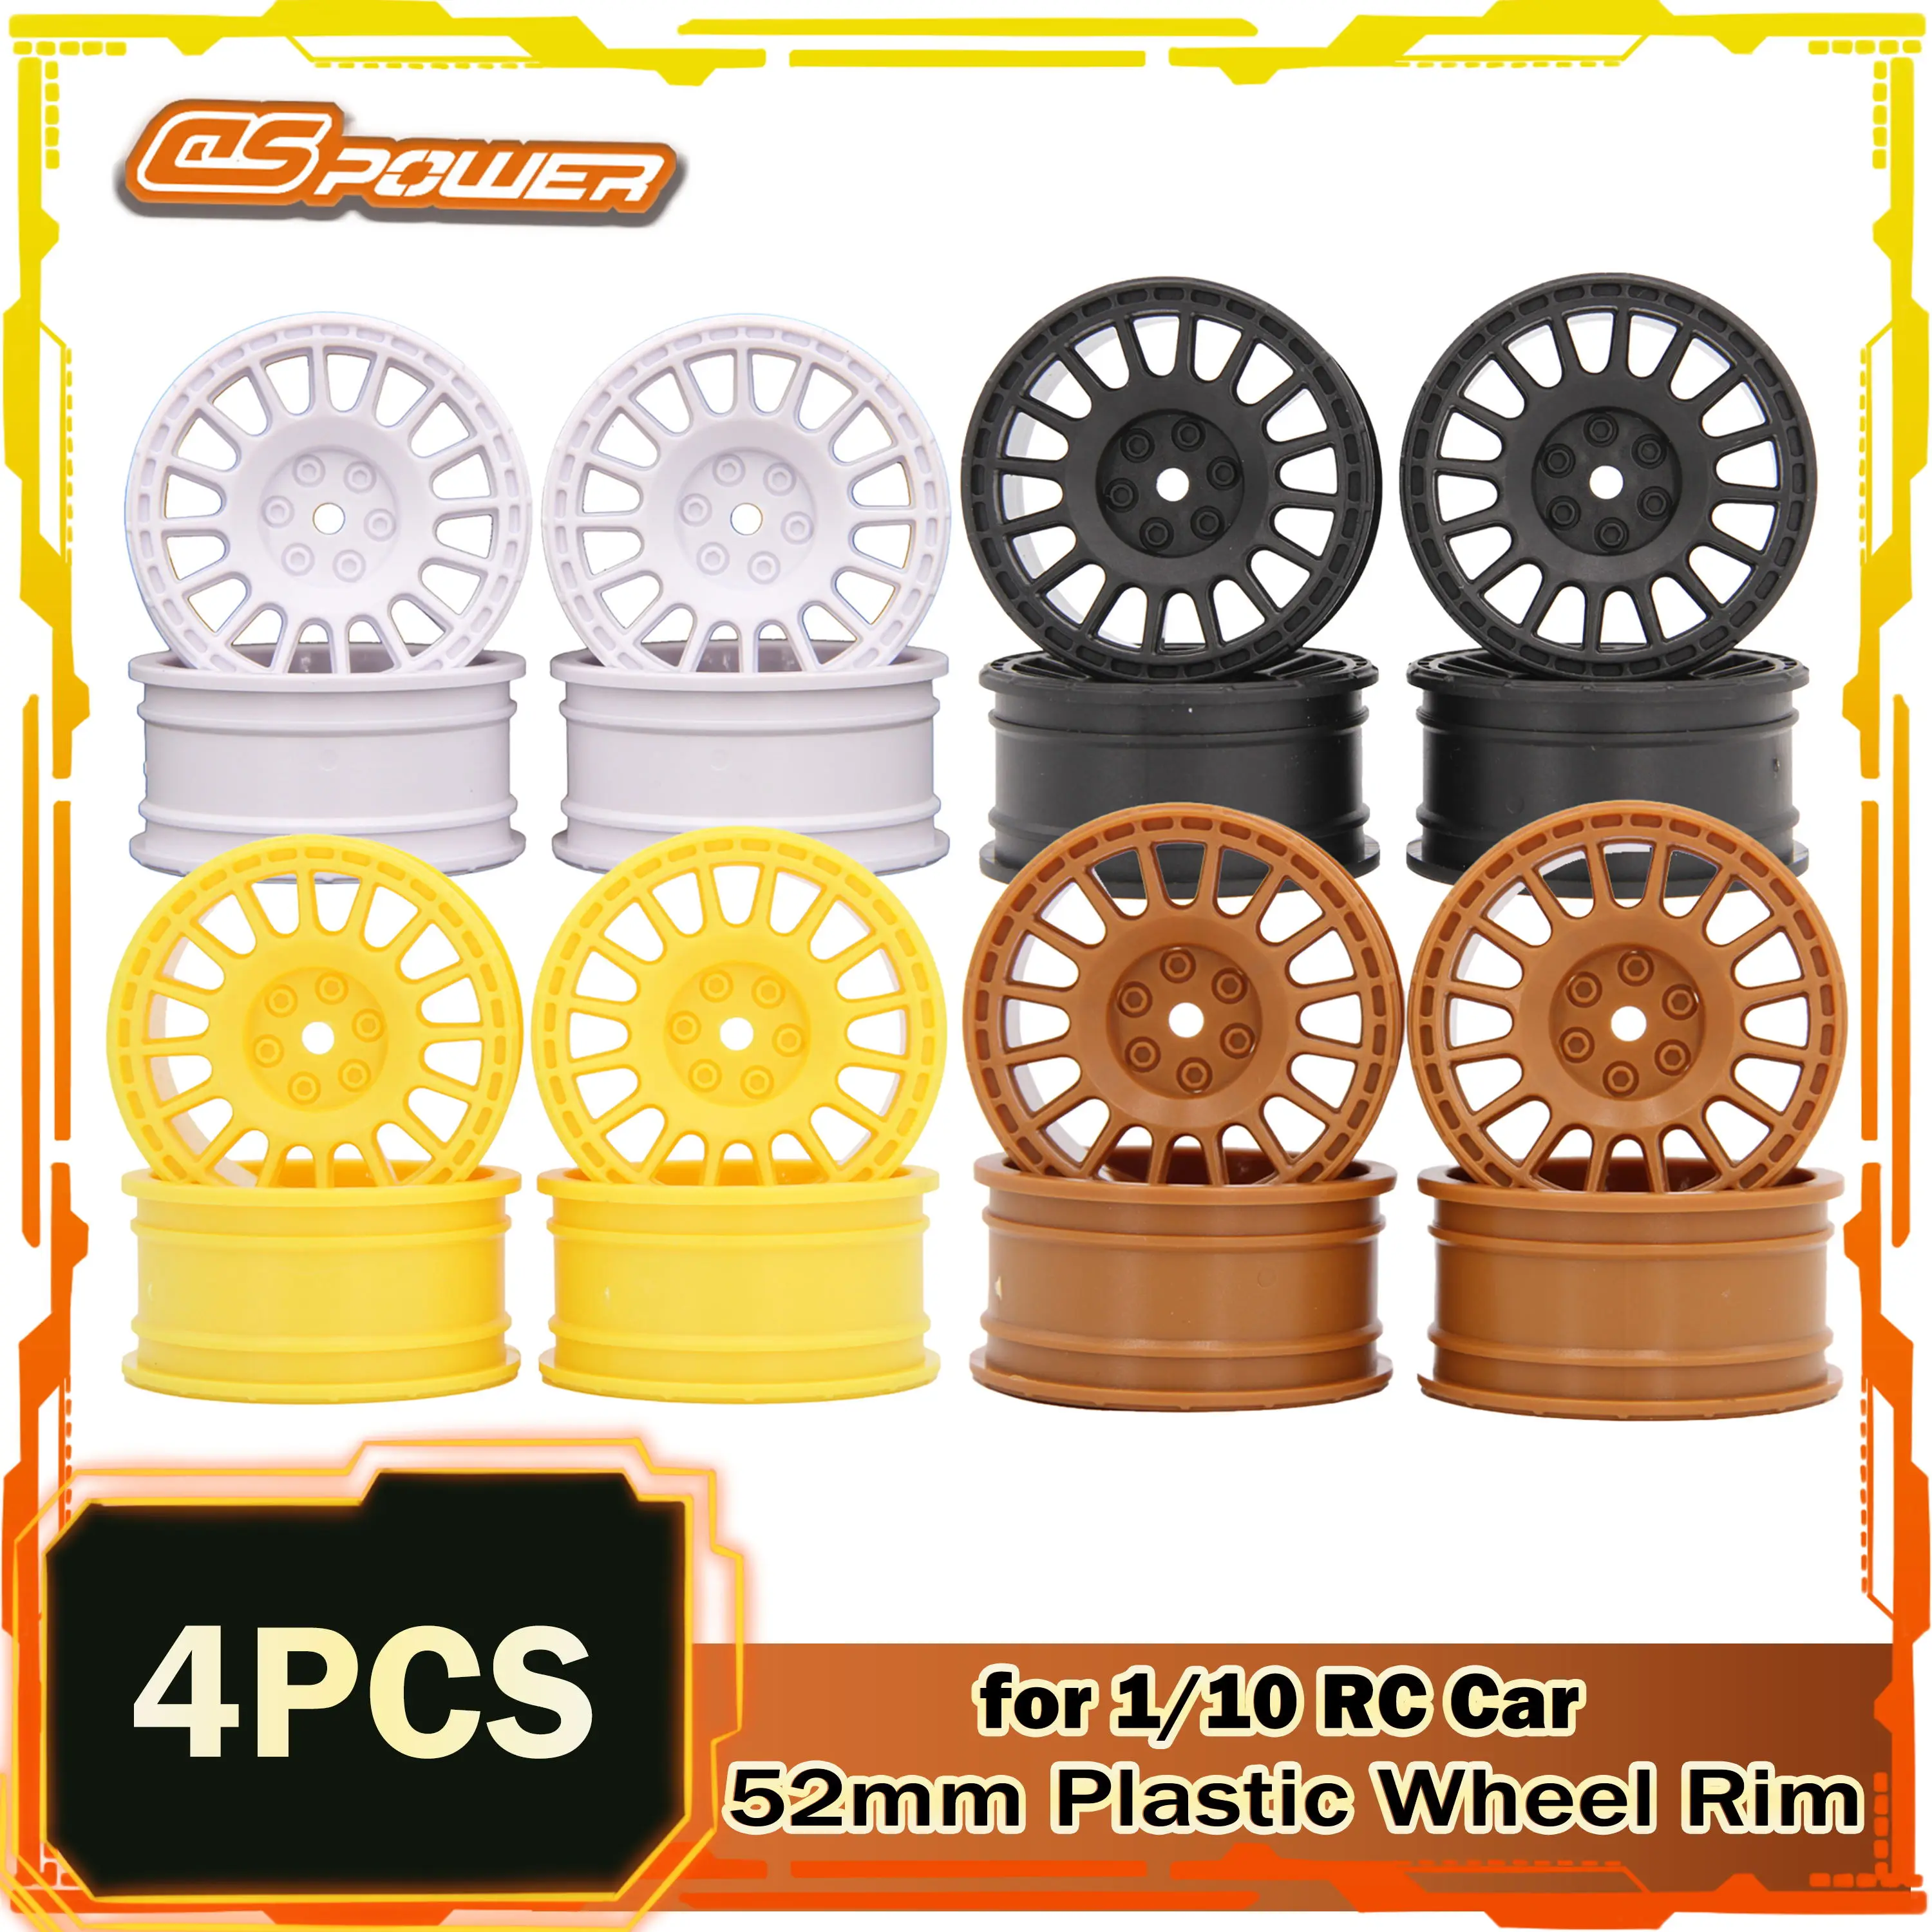 

4PCS 52*26mm 1/10 Plastic Wheel Rim Tyre Hub Tire for RC Racing Car Rally Truck Model Kyosho HSP HPI RGT LC PTG-2 Tamiya TT02